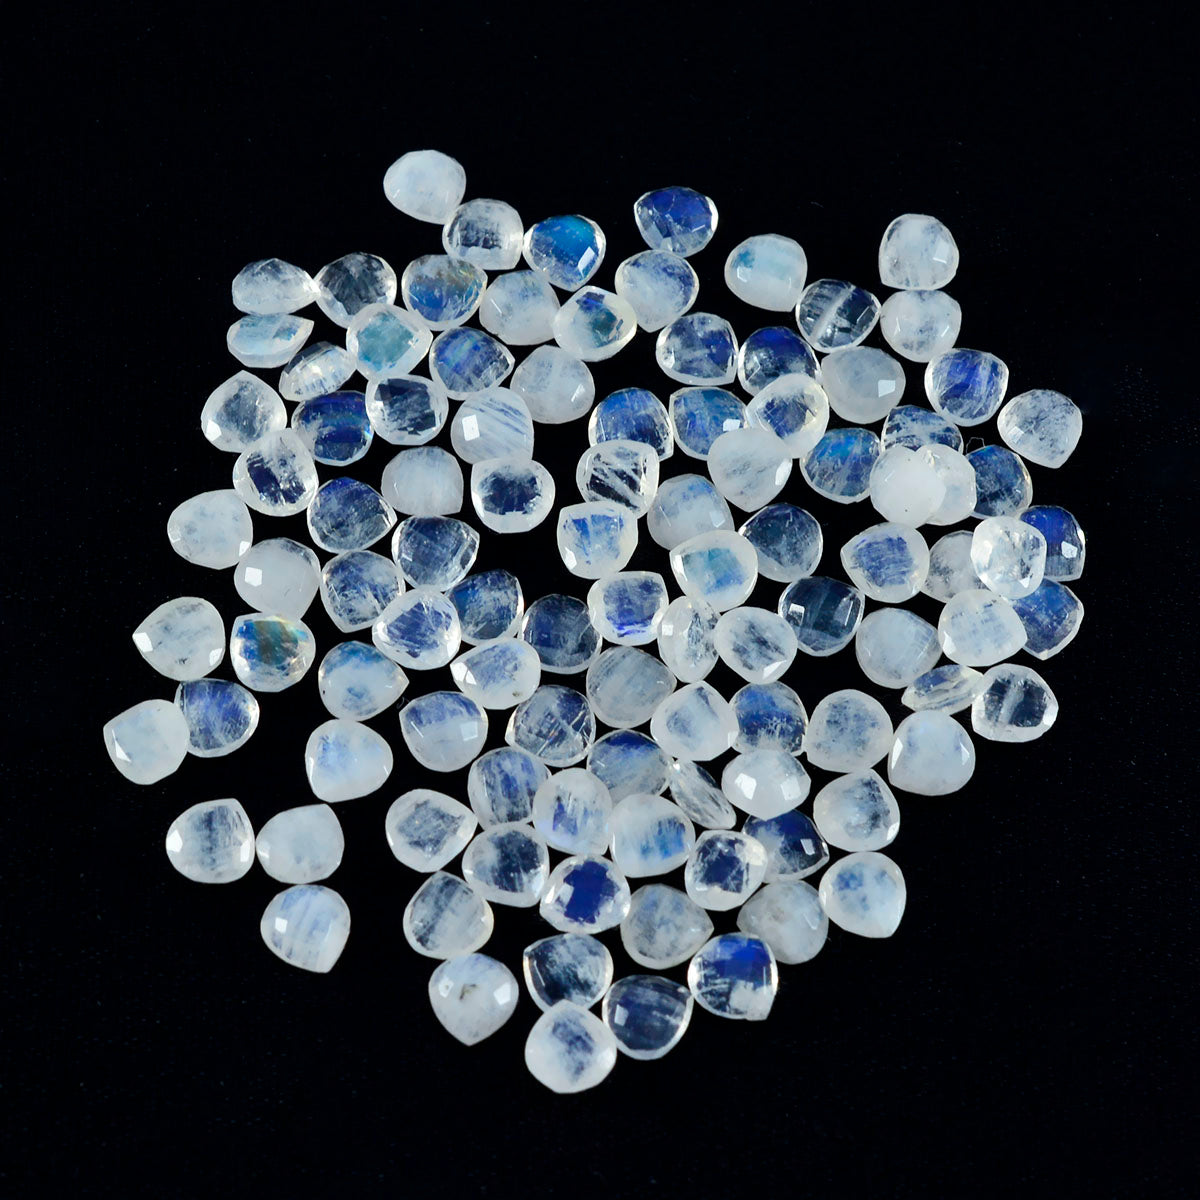 Riyogems 1PC White Rainbow Moonstone Faceted 4x4 mm Heart Shape Nice Quality Loose Gemstone